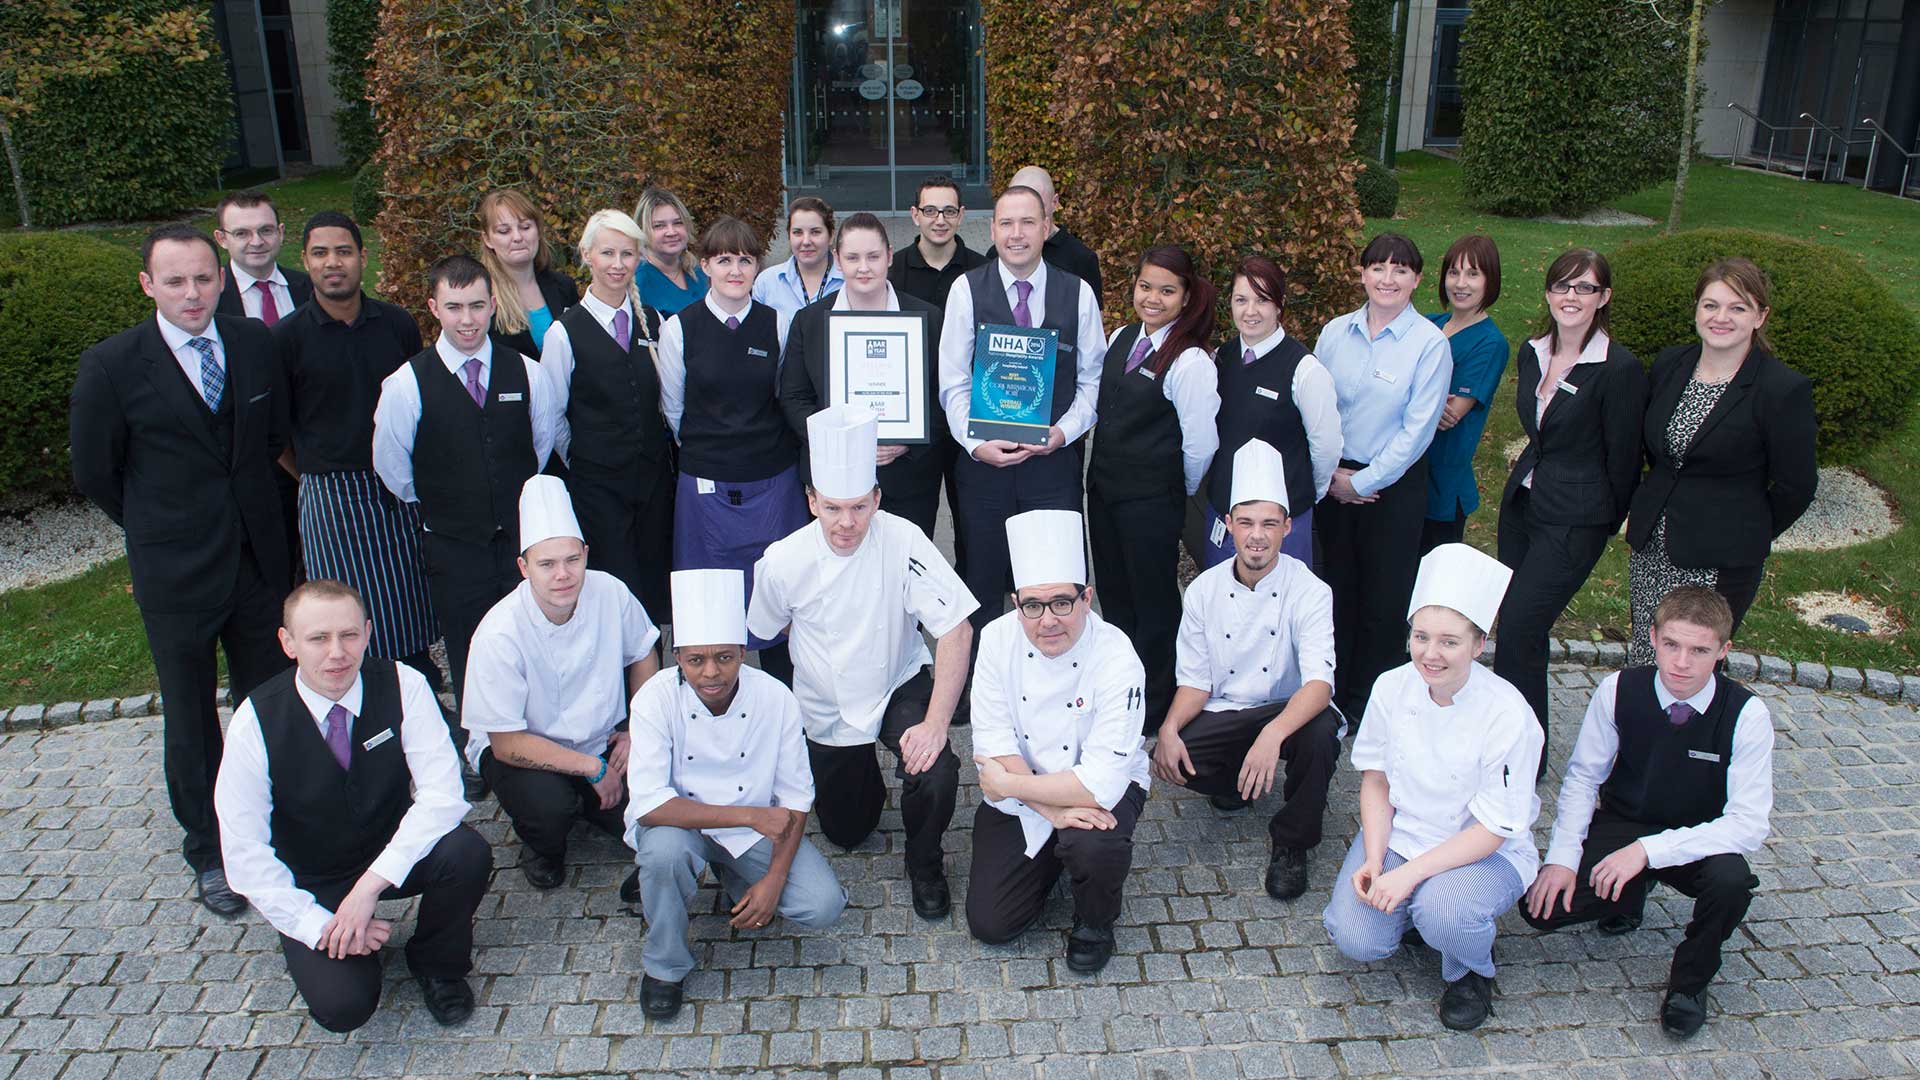 Staff at the Cork International Hotel display their Bar of the Year Award